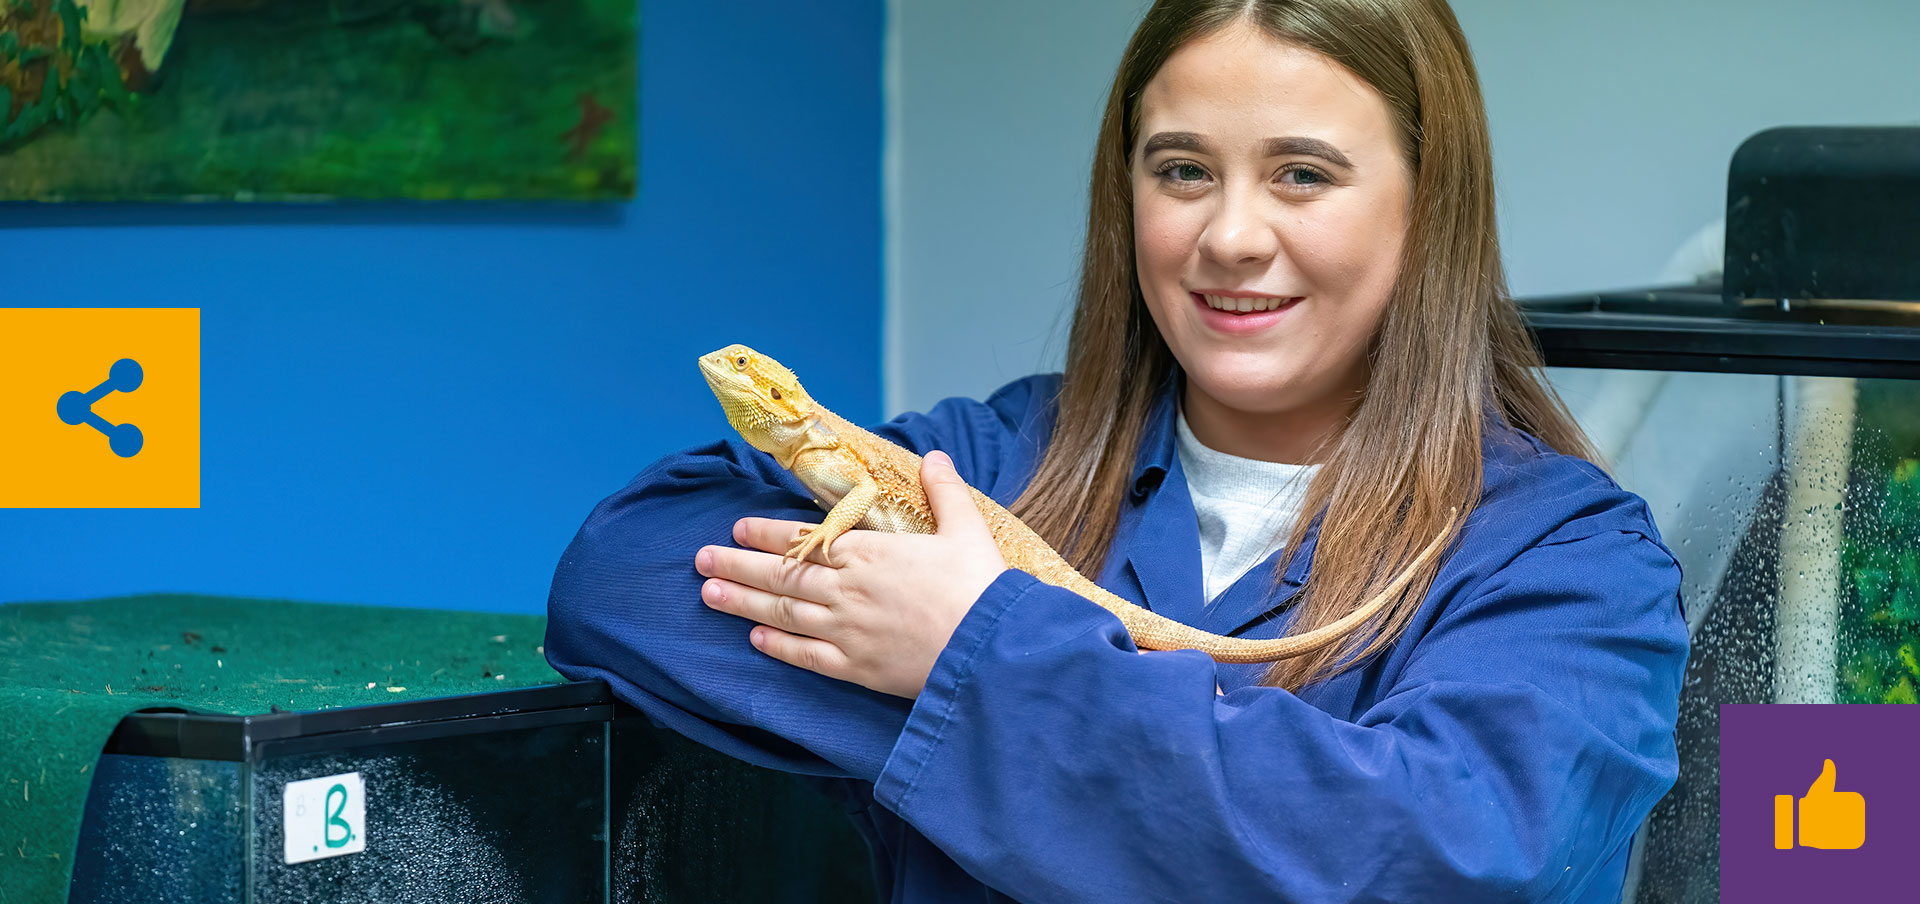 Animal care learner, Nina, holding a lizard